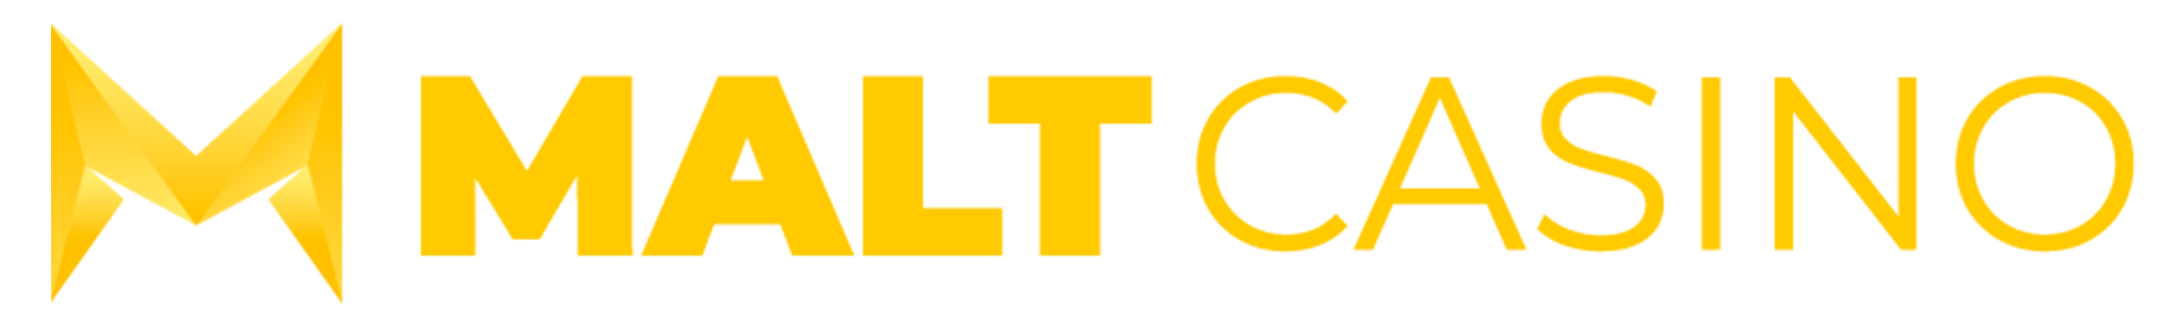 Call's logo